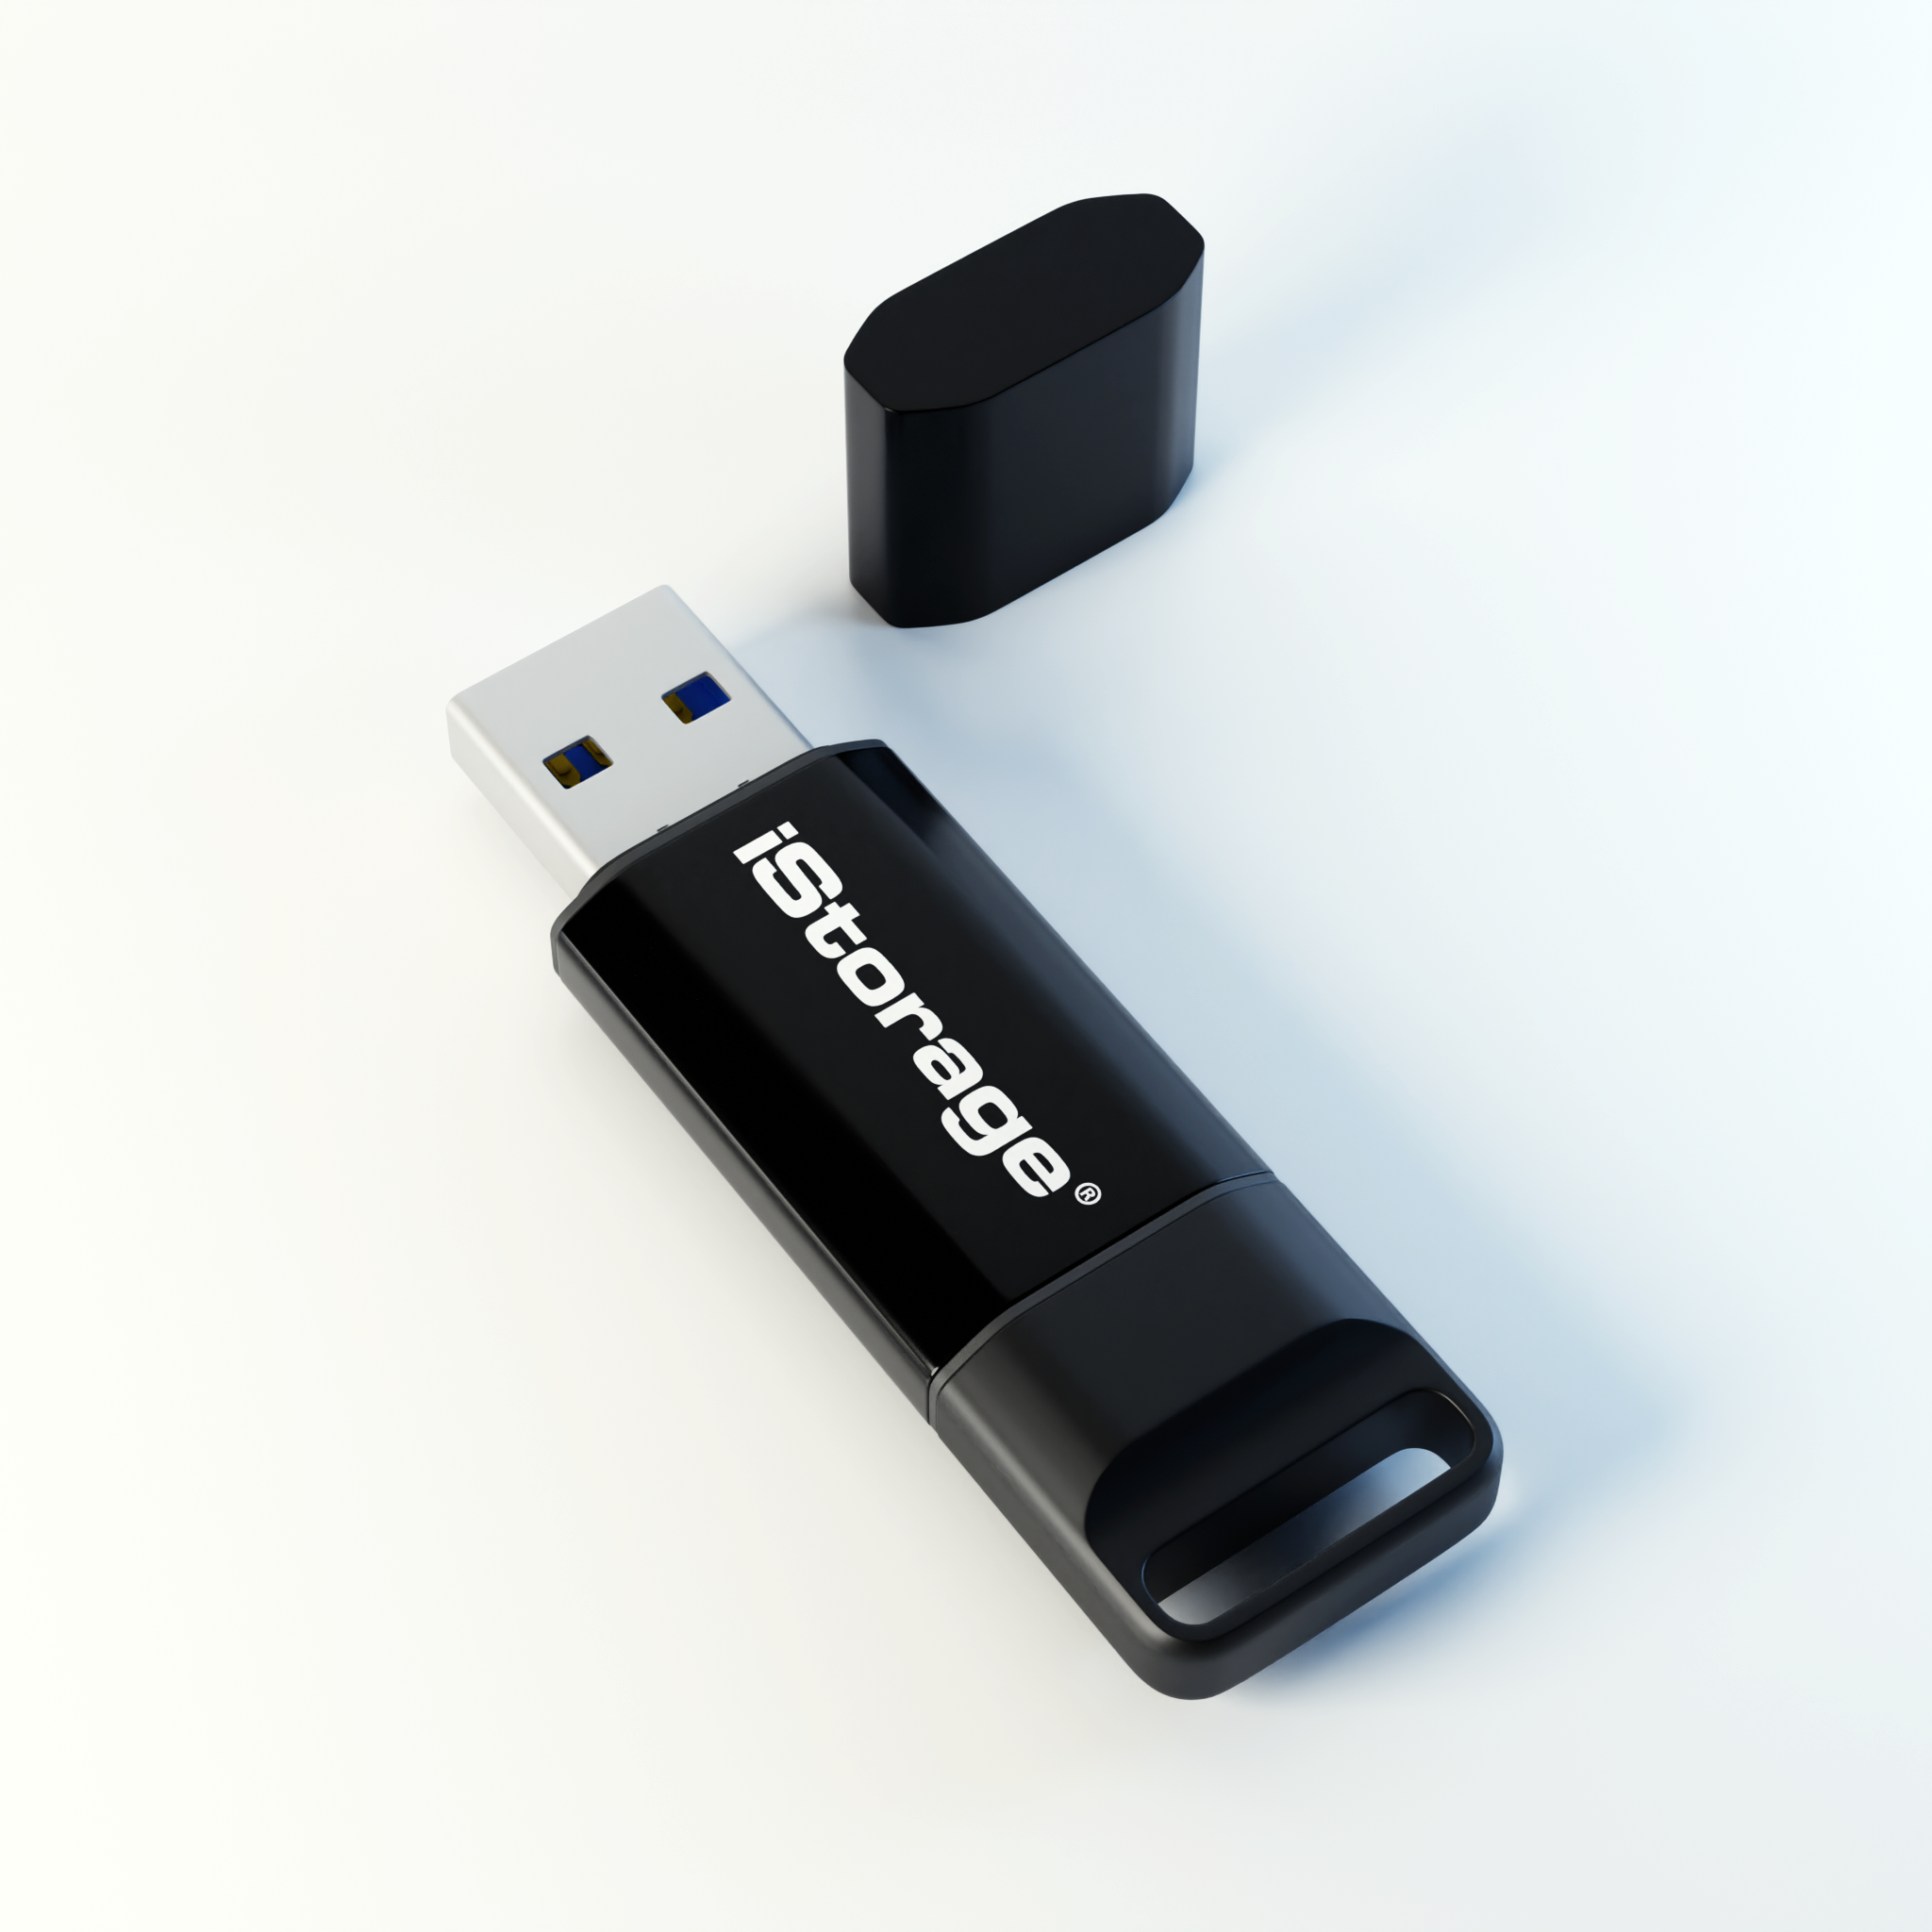 datAshur BT - iStorage (UK) Secure encrypted flash drive